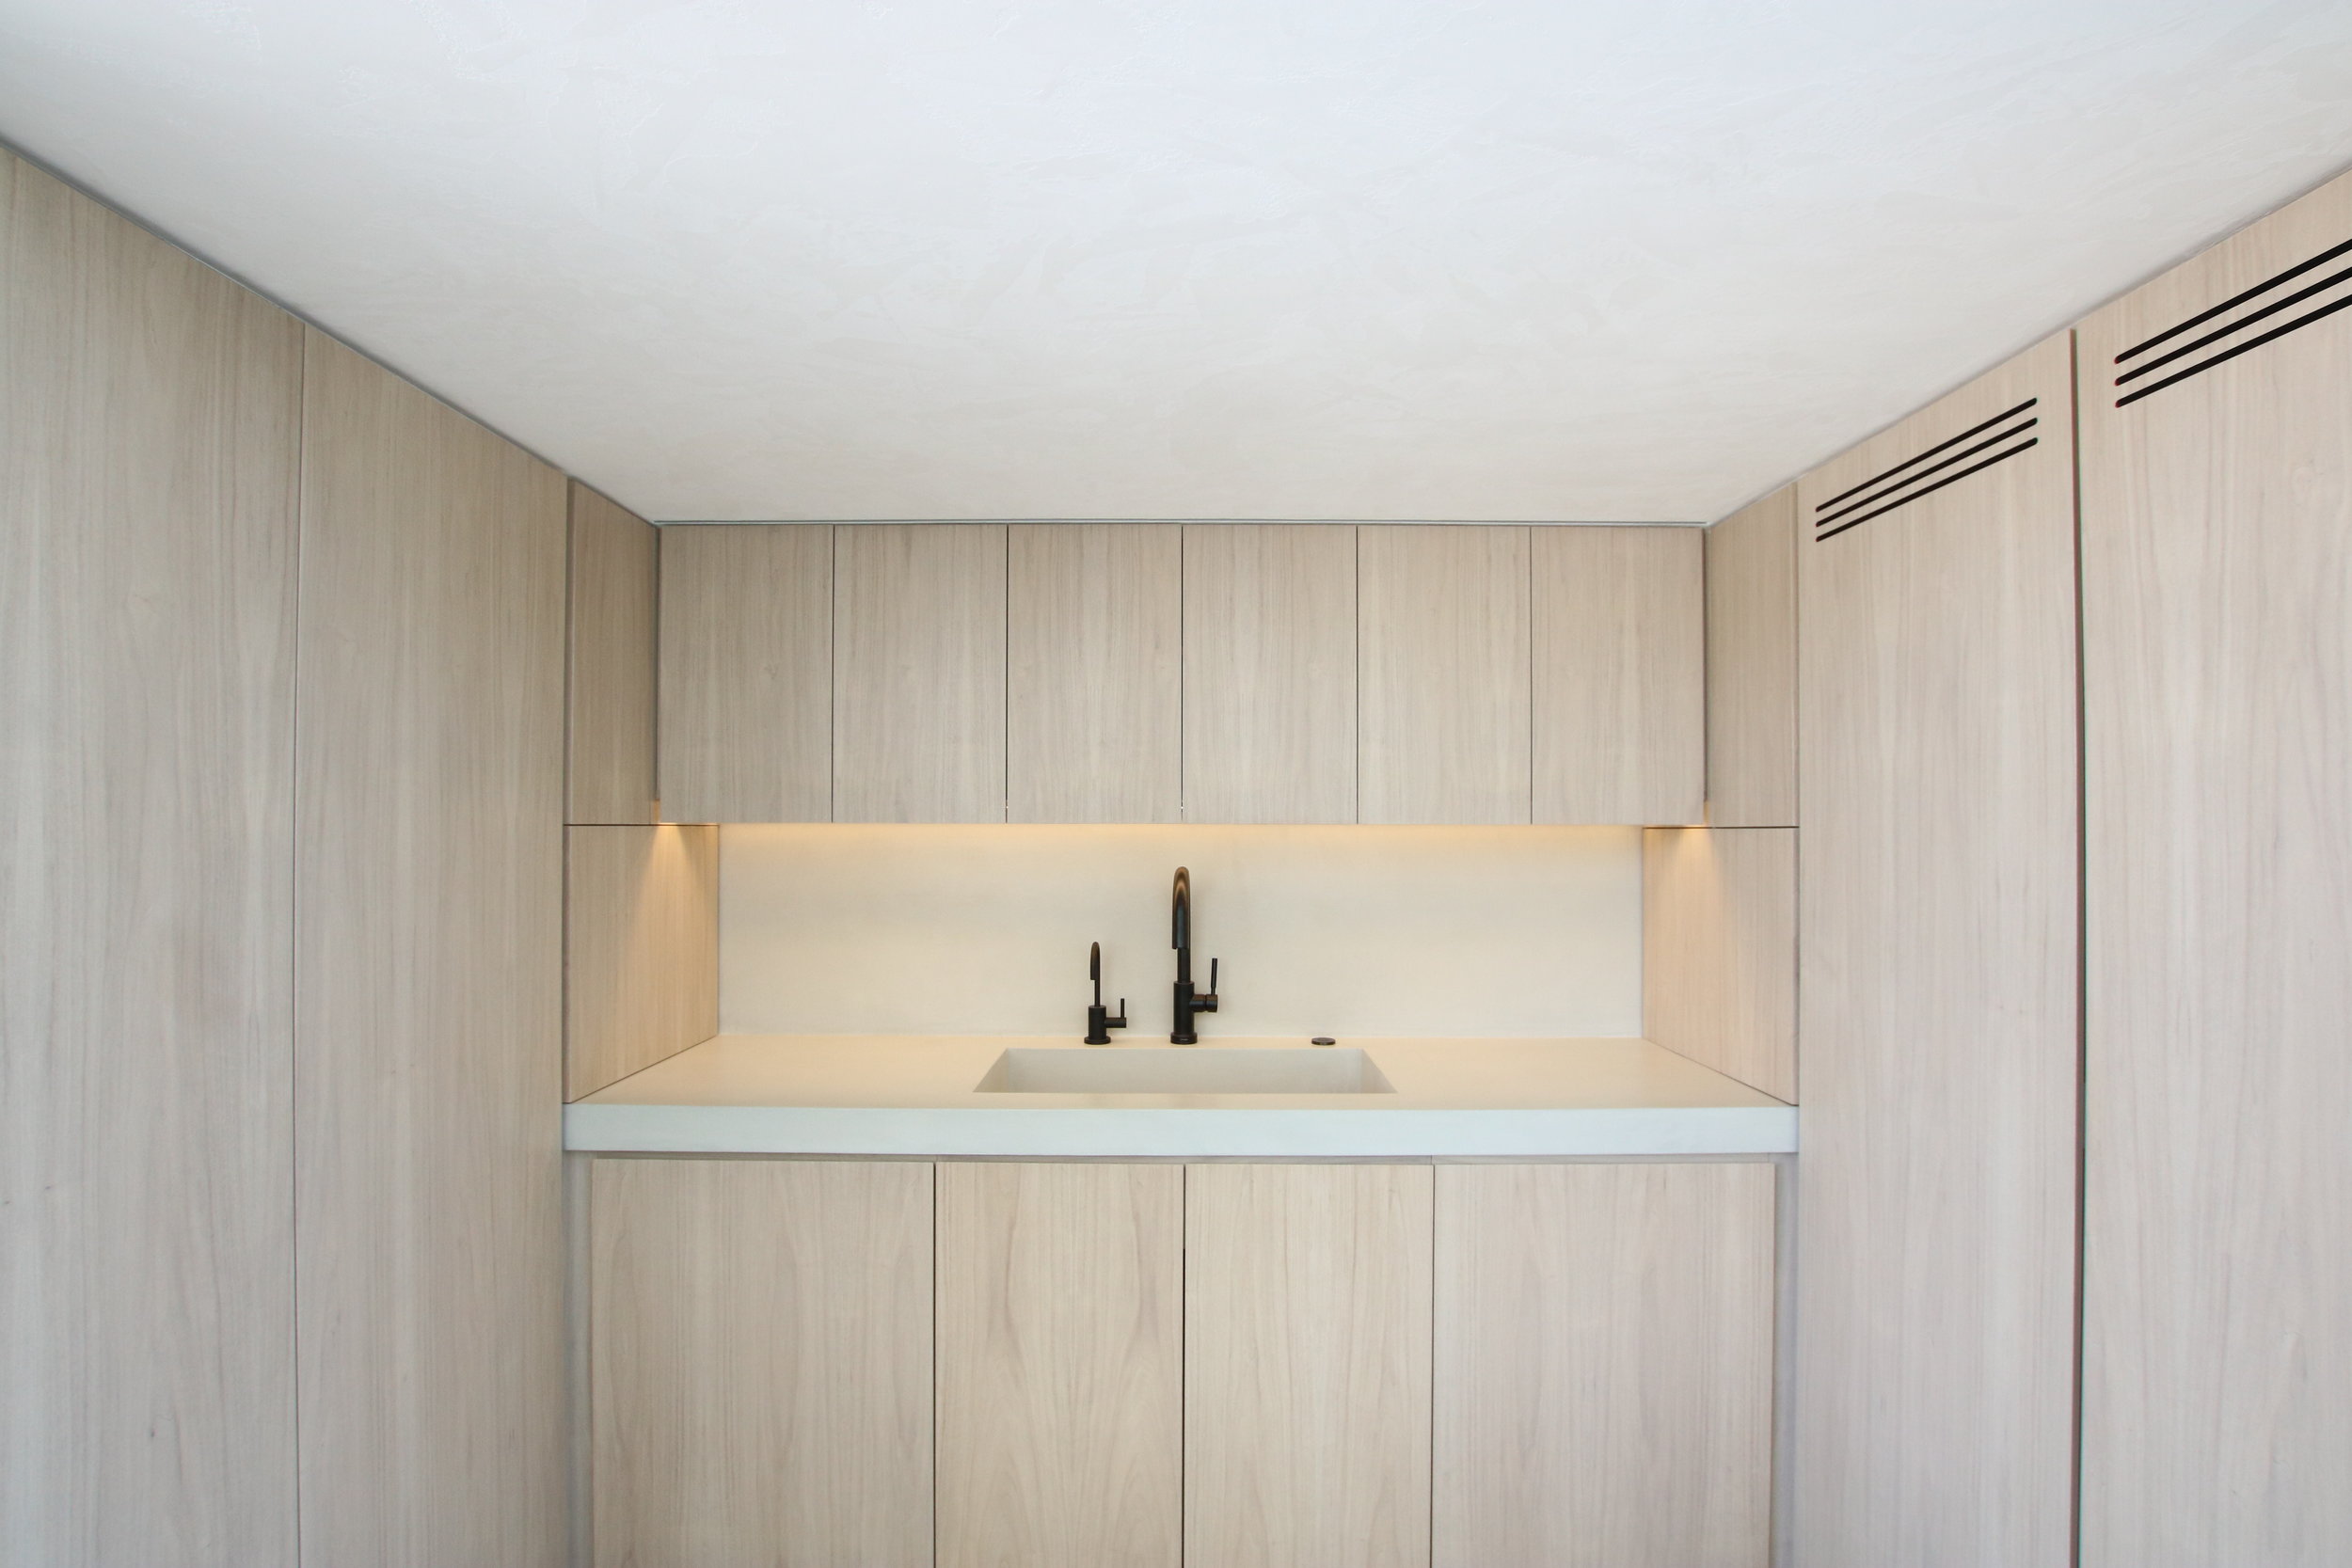 05-res4-resolution-4-architecture-modern-home-surfside-residence-renovation-kitchen.JPG